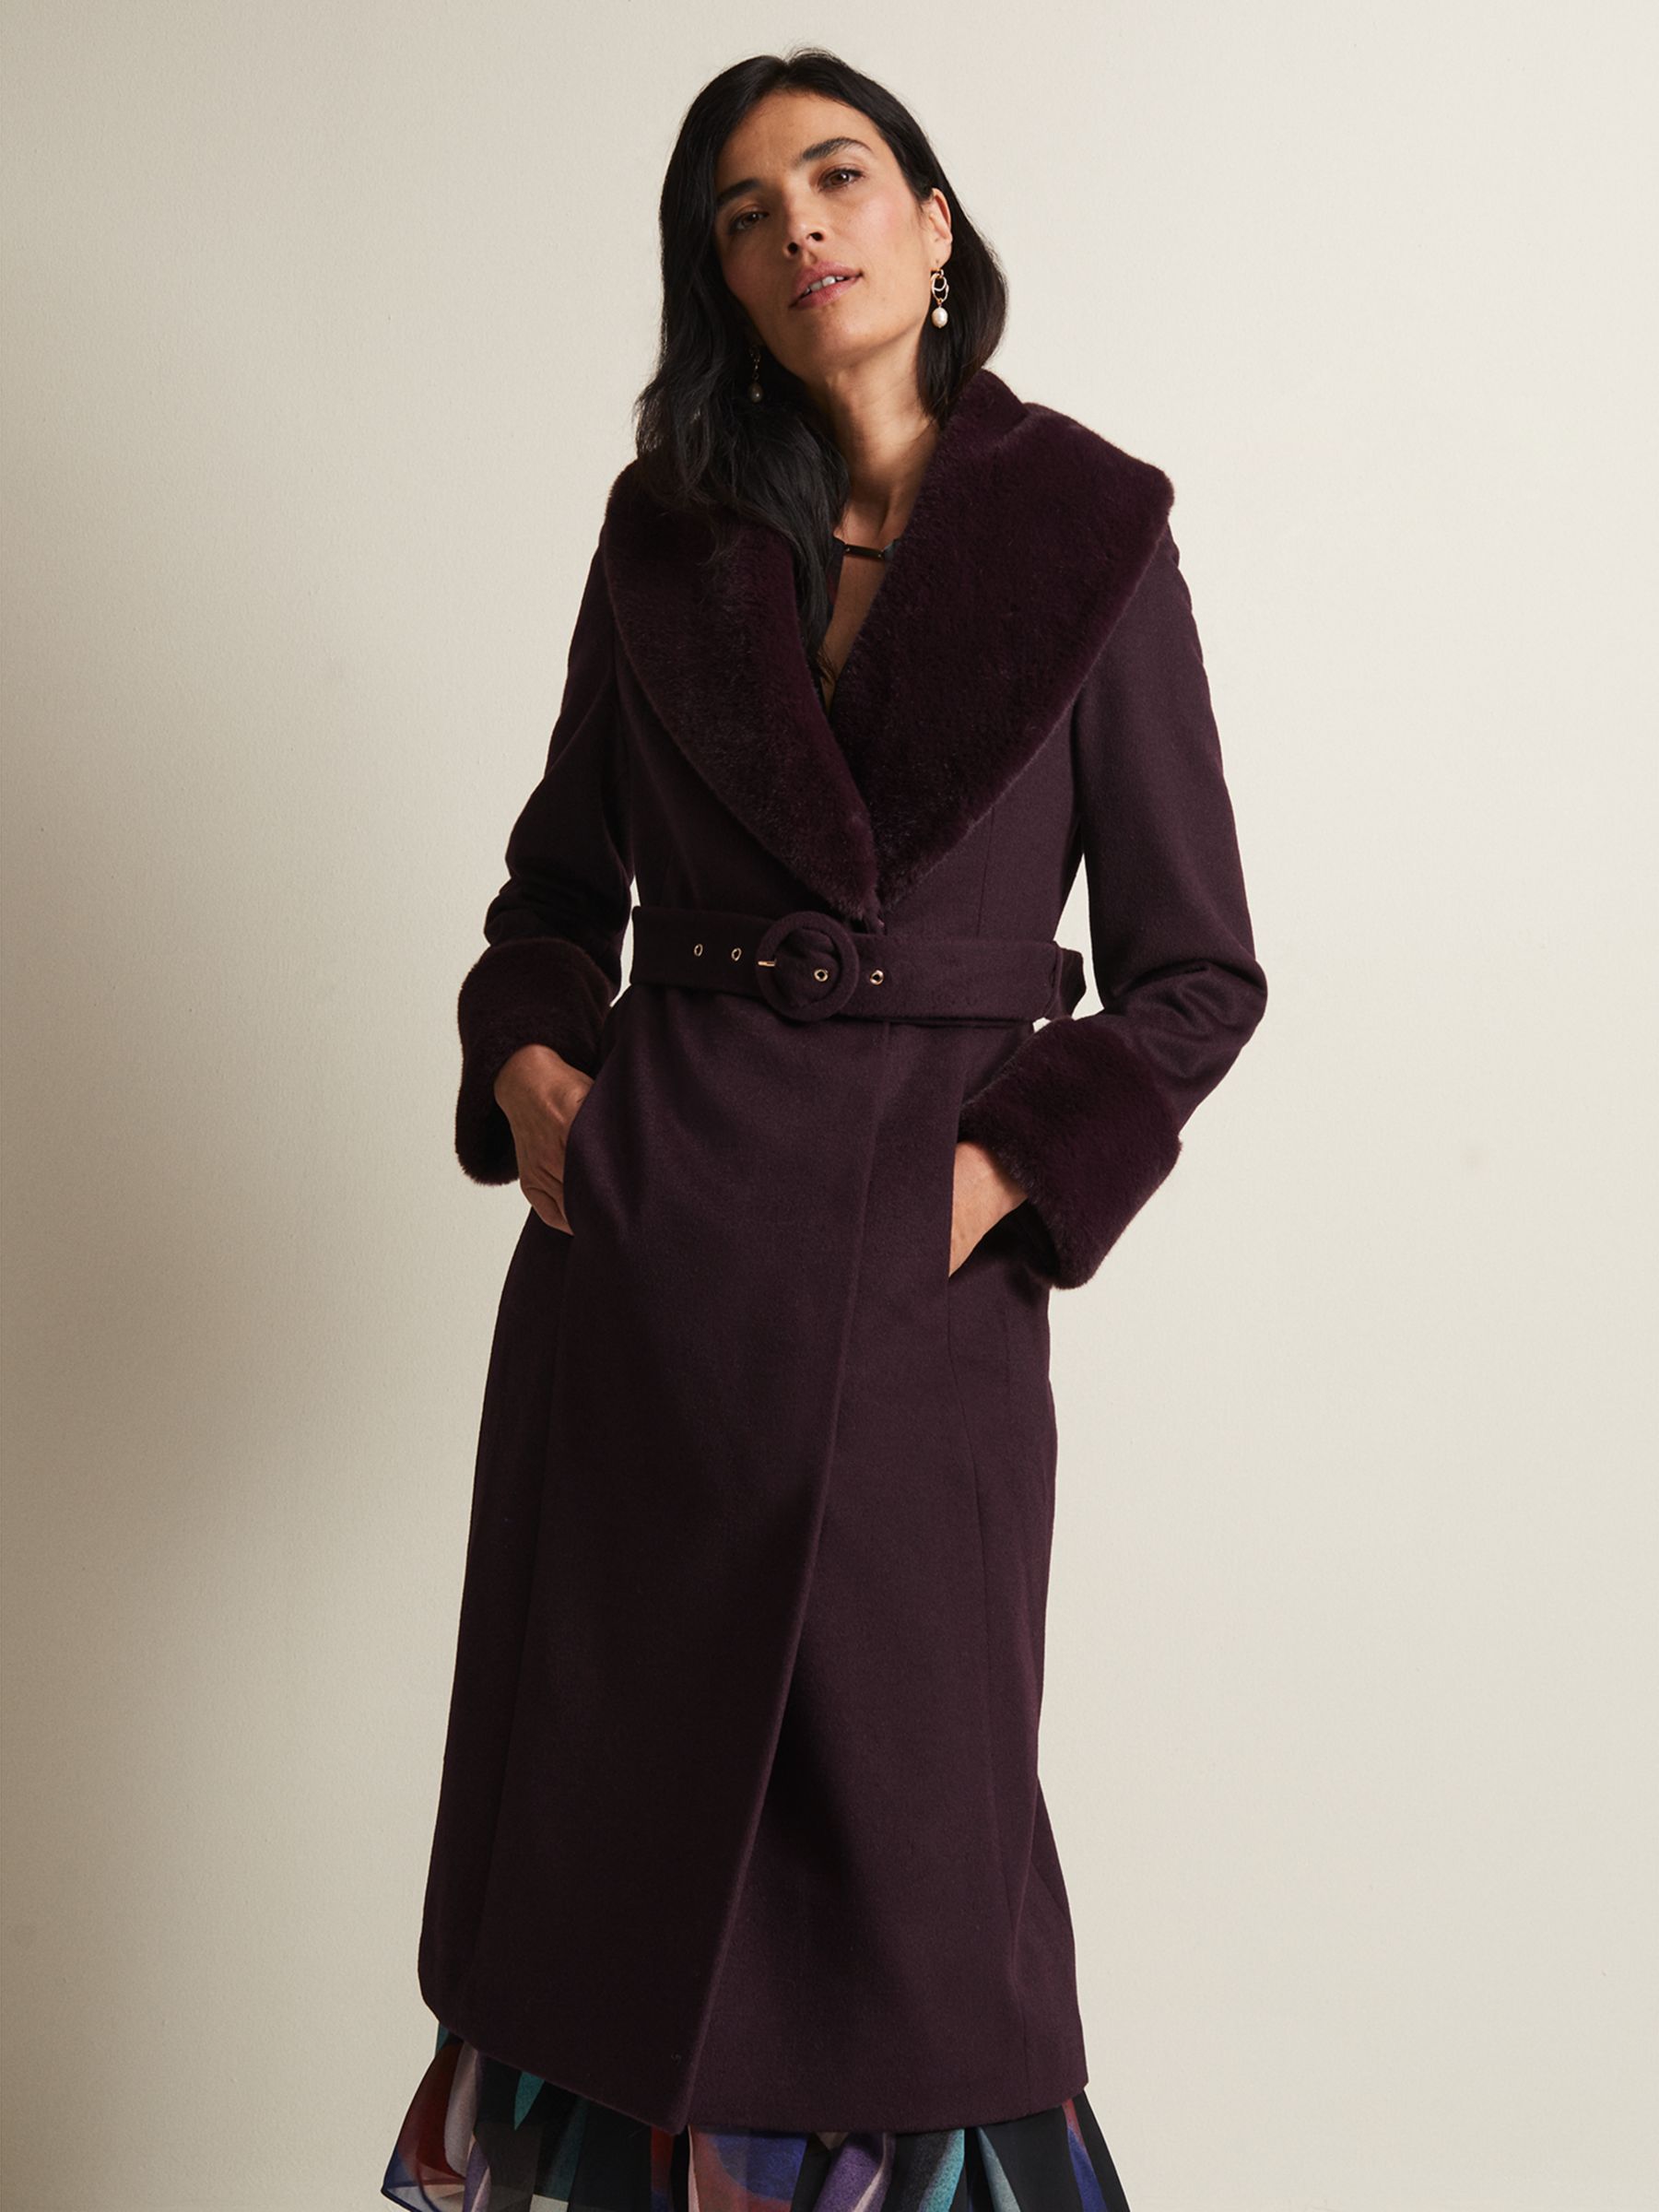 Buy Phase Eight Zylah Wool Blend Faux Fur Collar Smart Coat Online at johnlewis.com